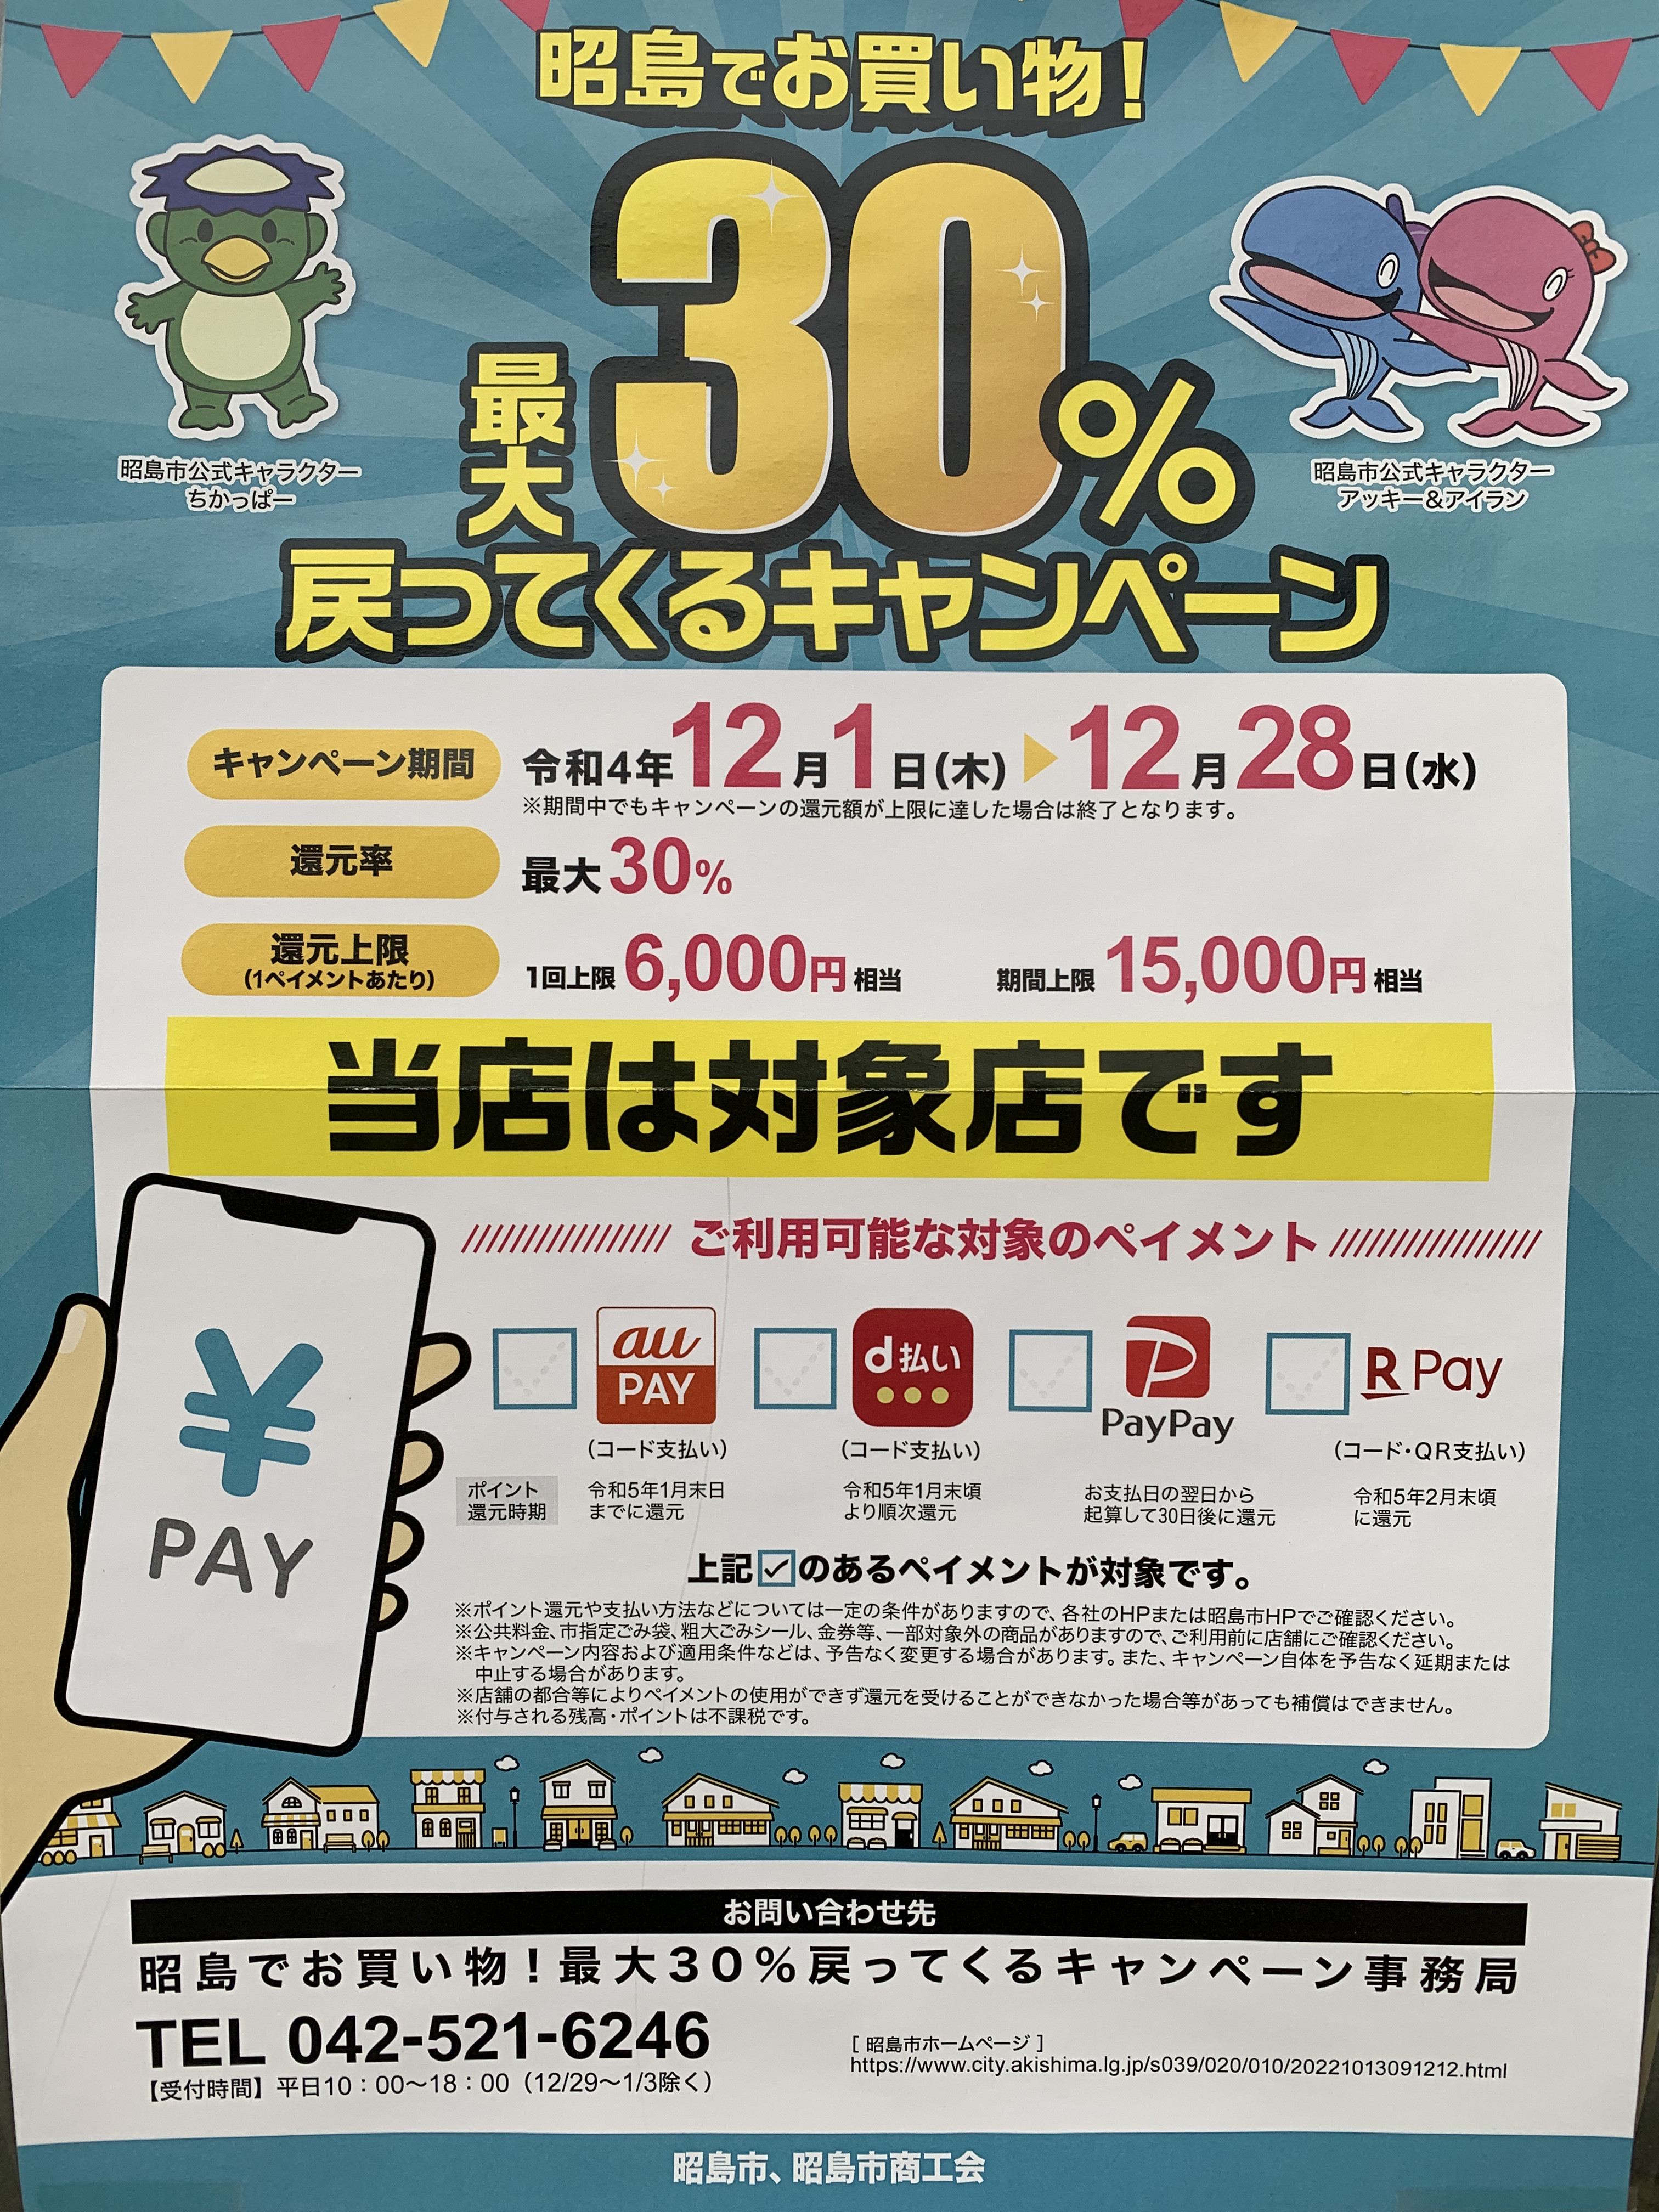 PayPay３０%還元キャンペーン